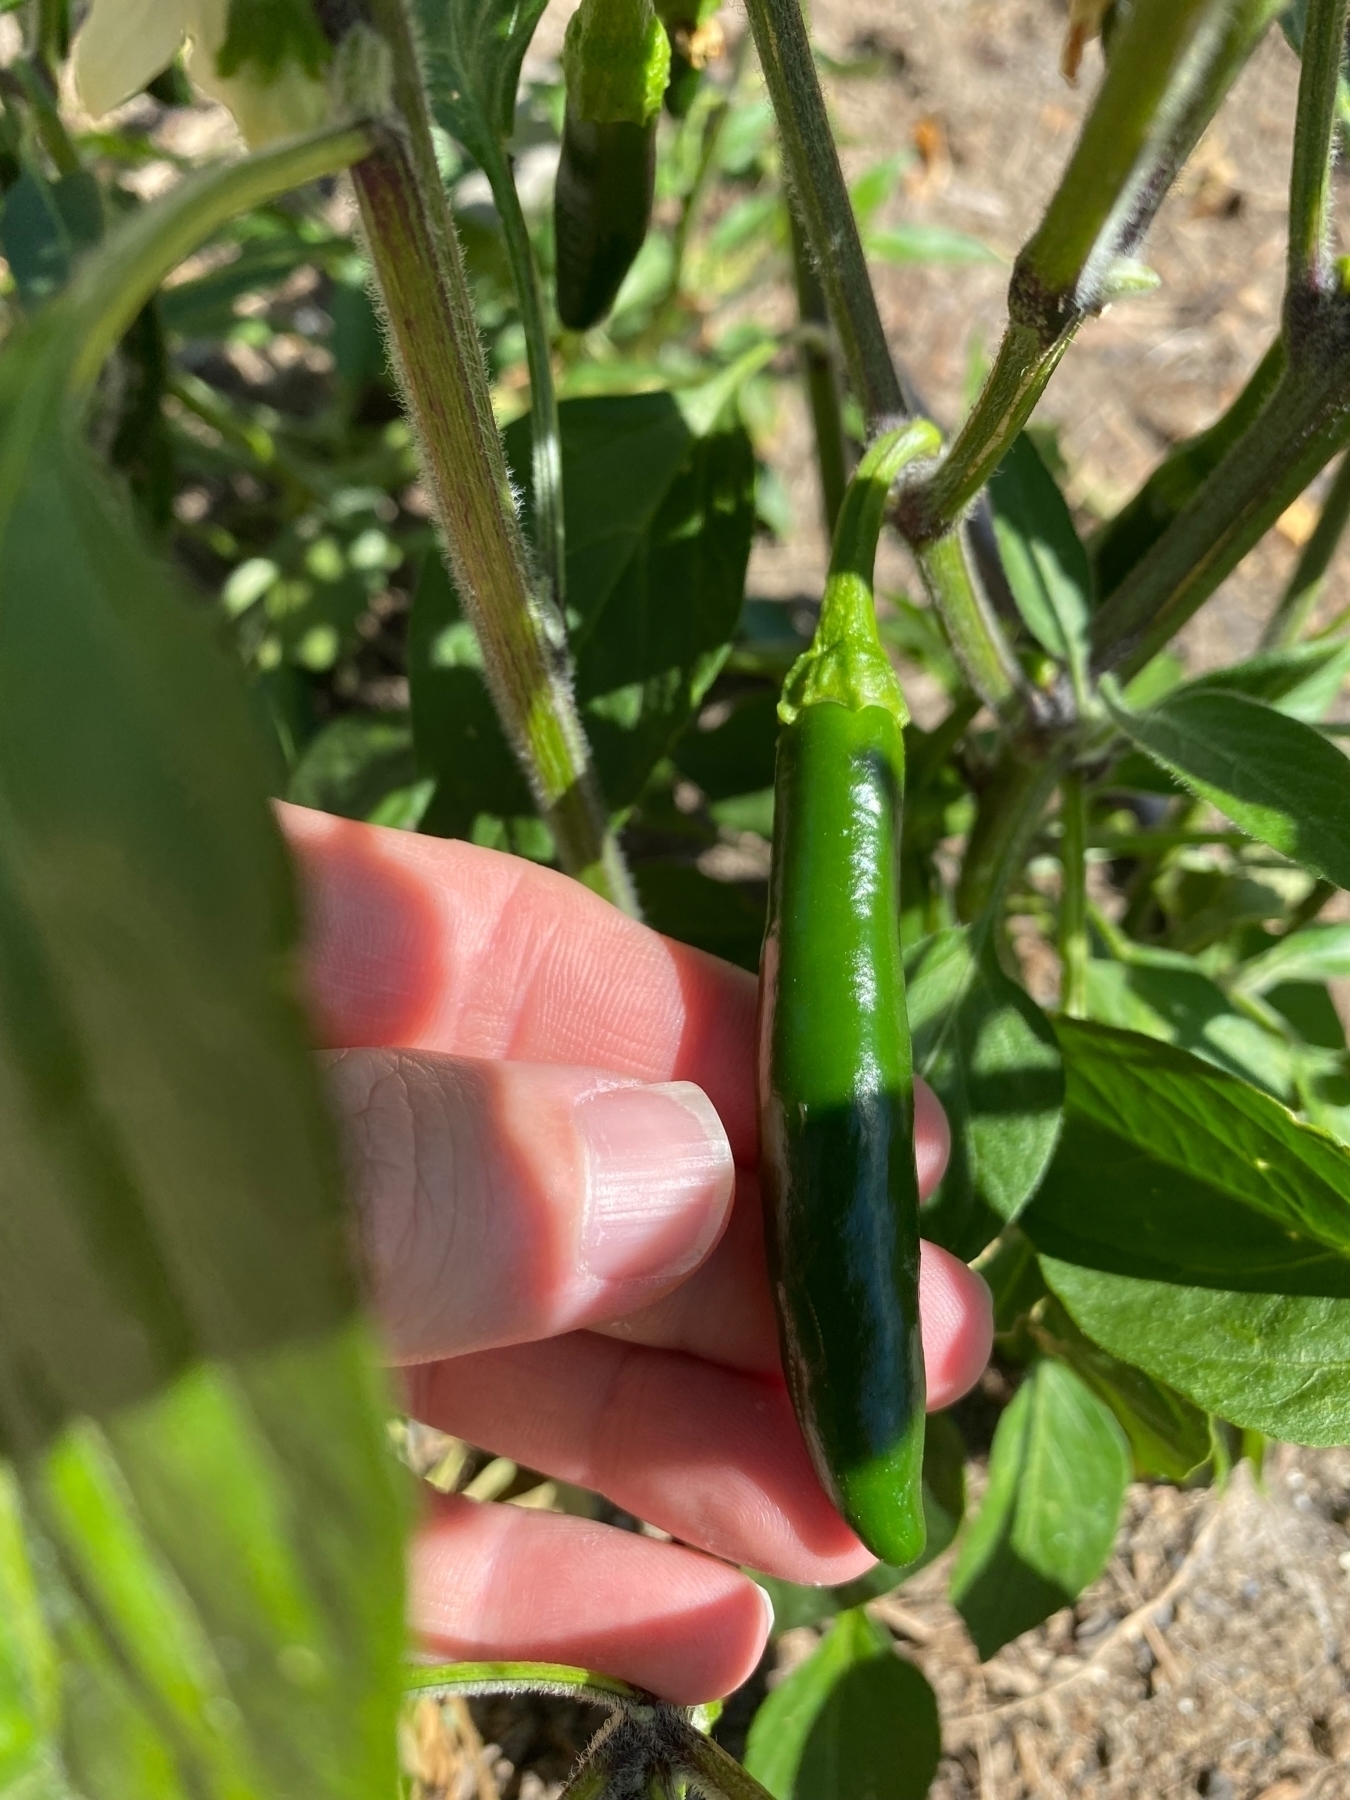 Nice long Serrano pepper